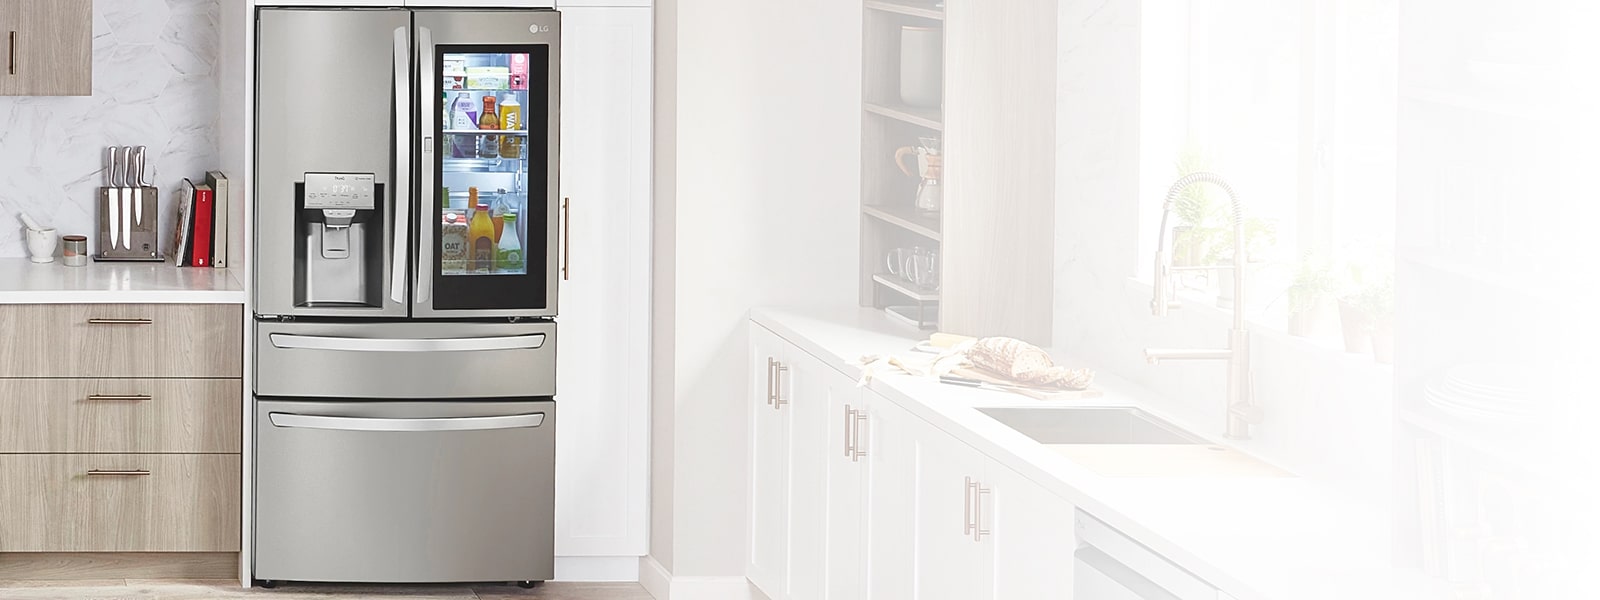 LG GB6140PZQV Refrigerator - MULTI DOOR Shiny Steel FRIDGE FREEZER